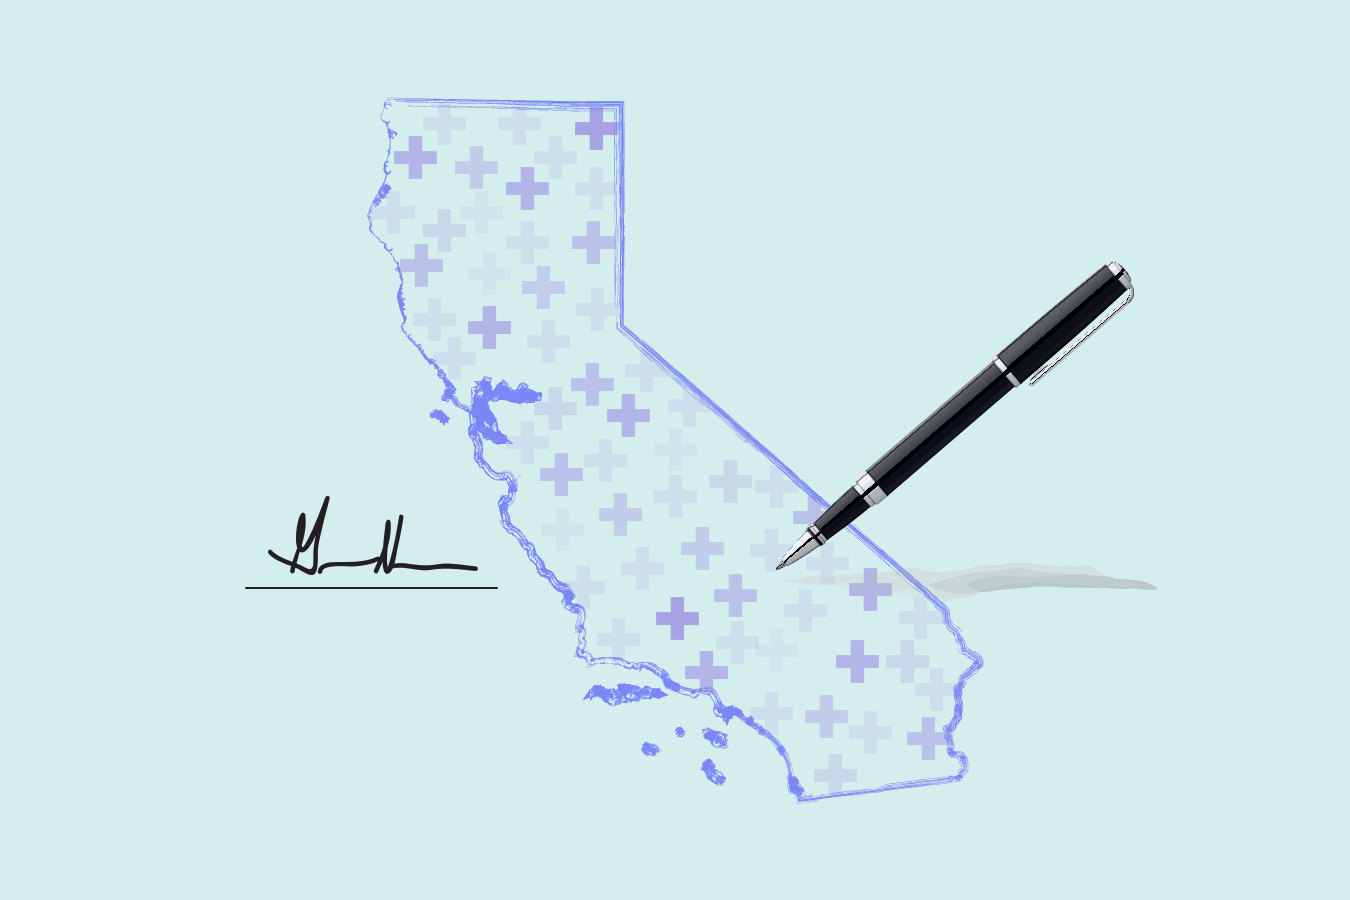 Cdc Income Eligibility Chart California